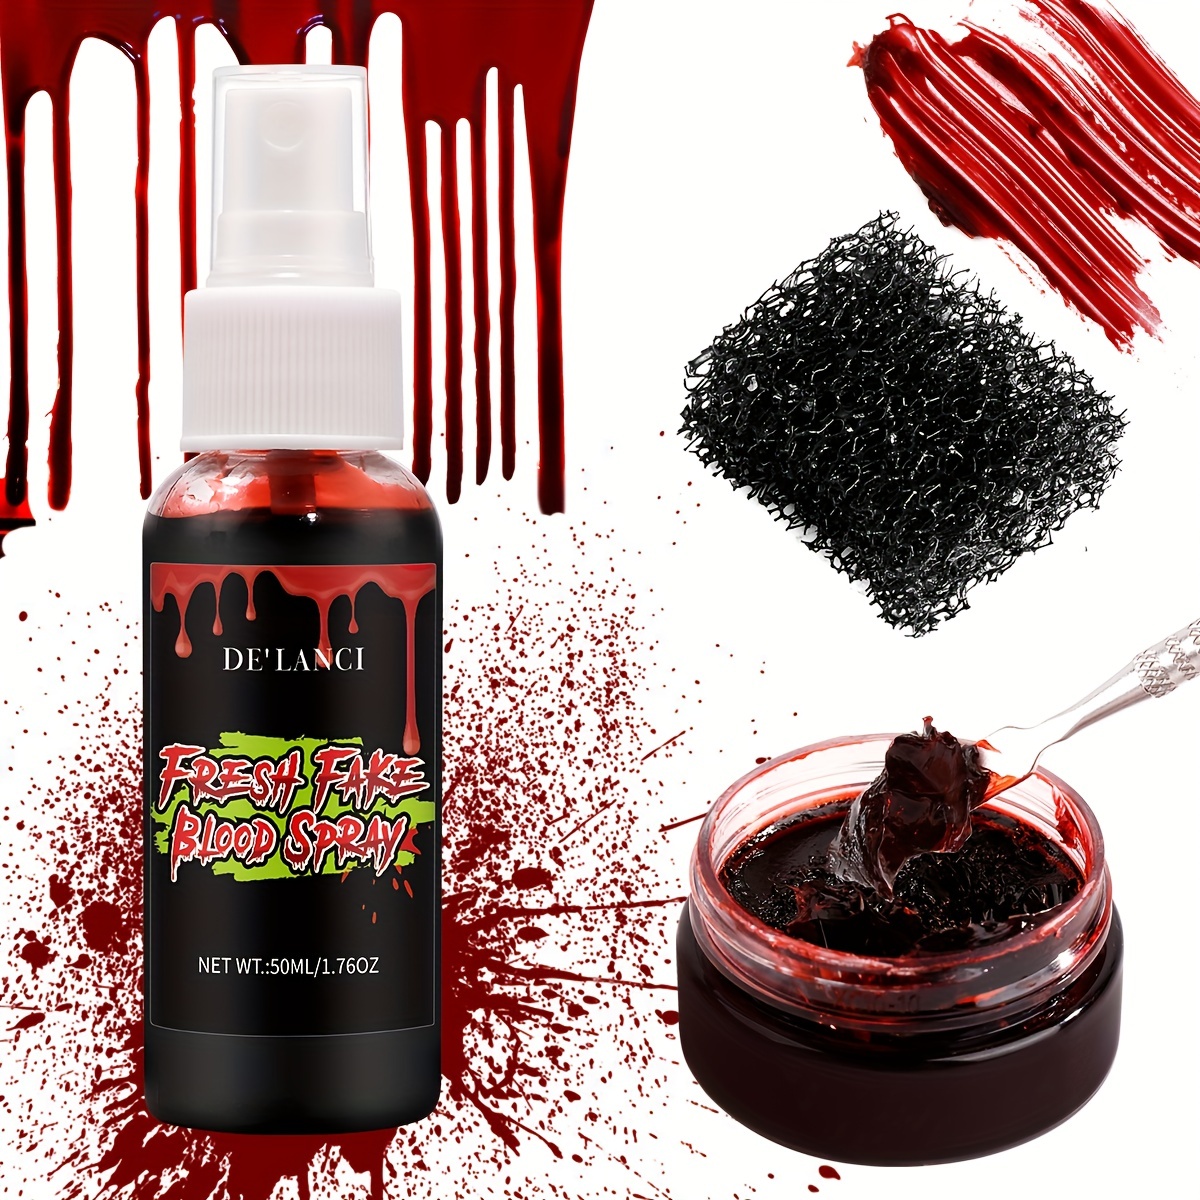 Kit de maquillaje SFX de látex líquido para Halloween, efectos especiales,  cera de cicatrices, 2 btl de látex líquido + 2 btl sangre falsa + espátula